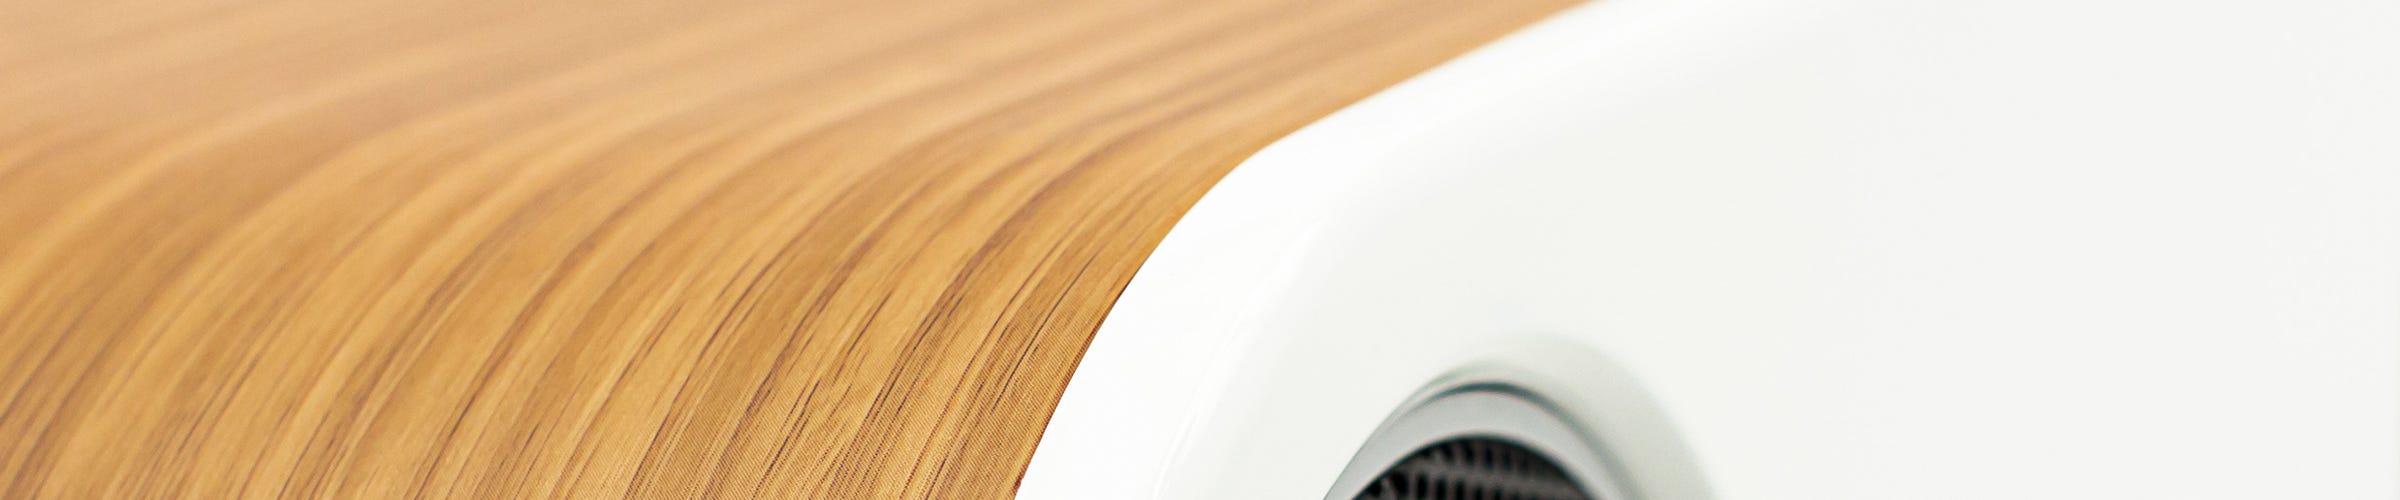 Fi30 bluetooth speaker cabinet wood design